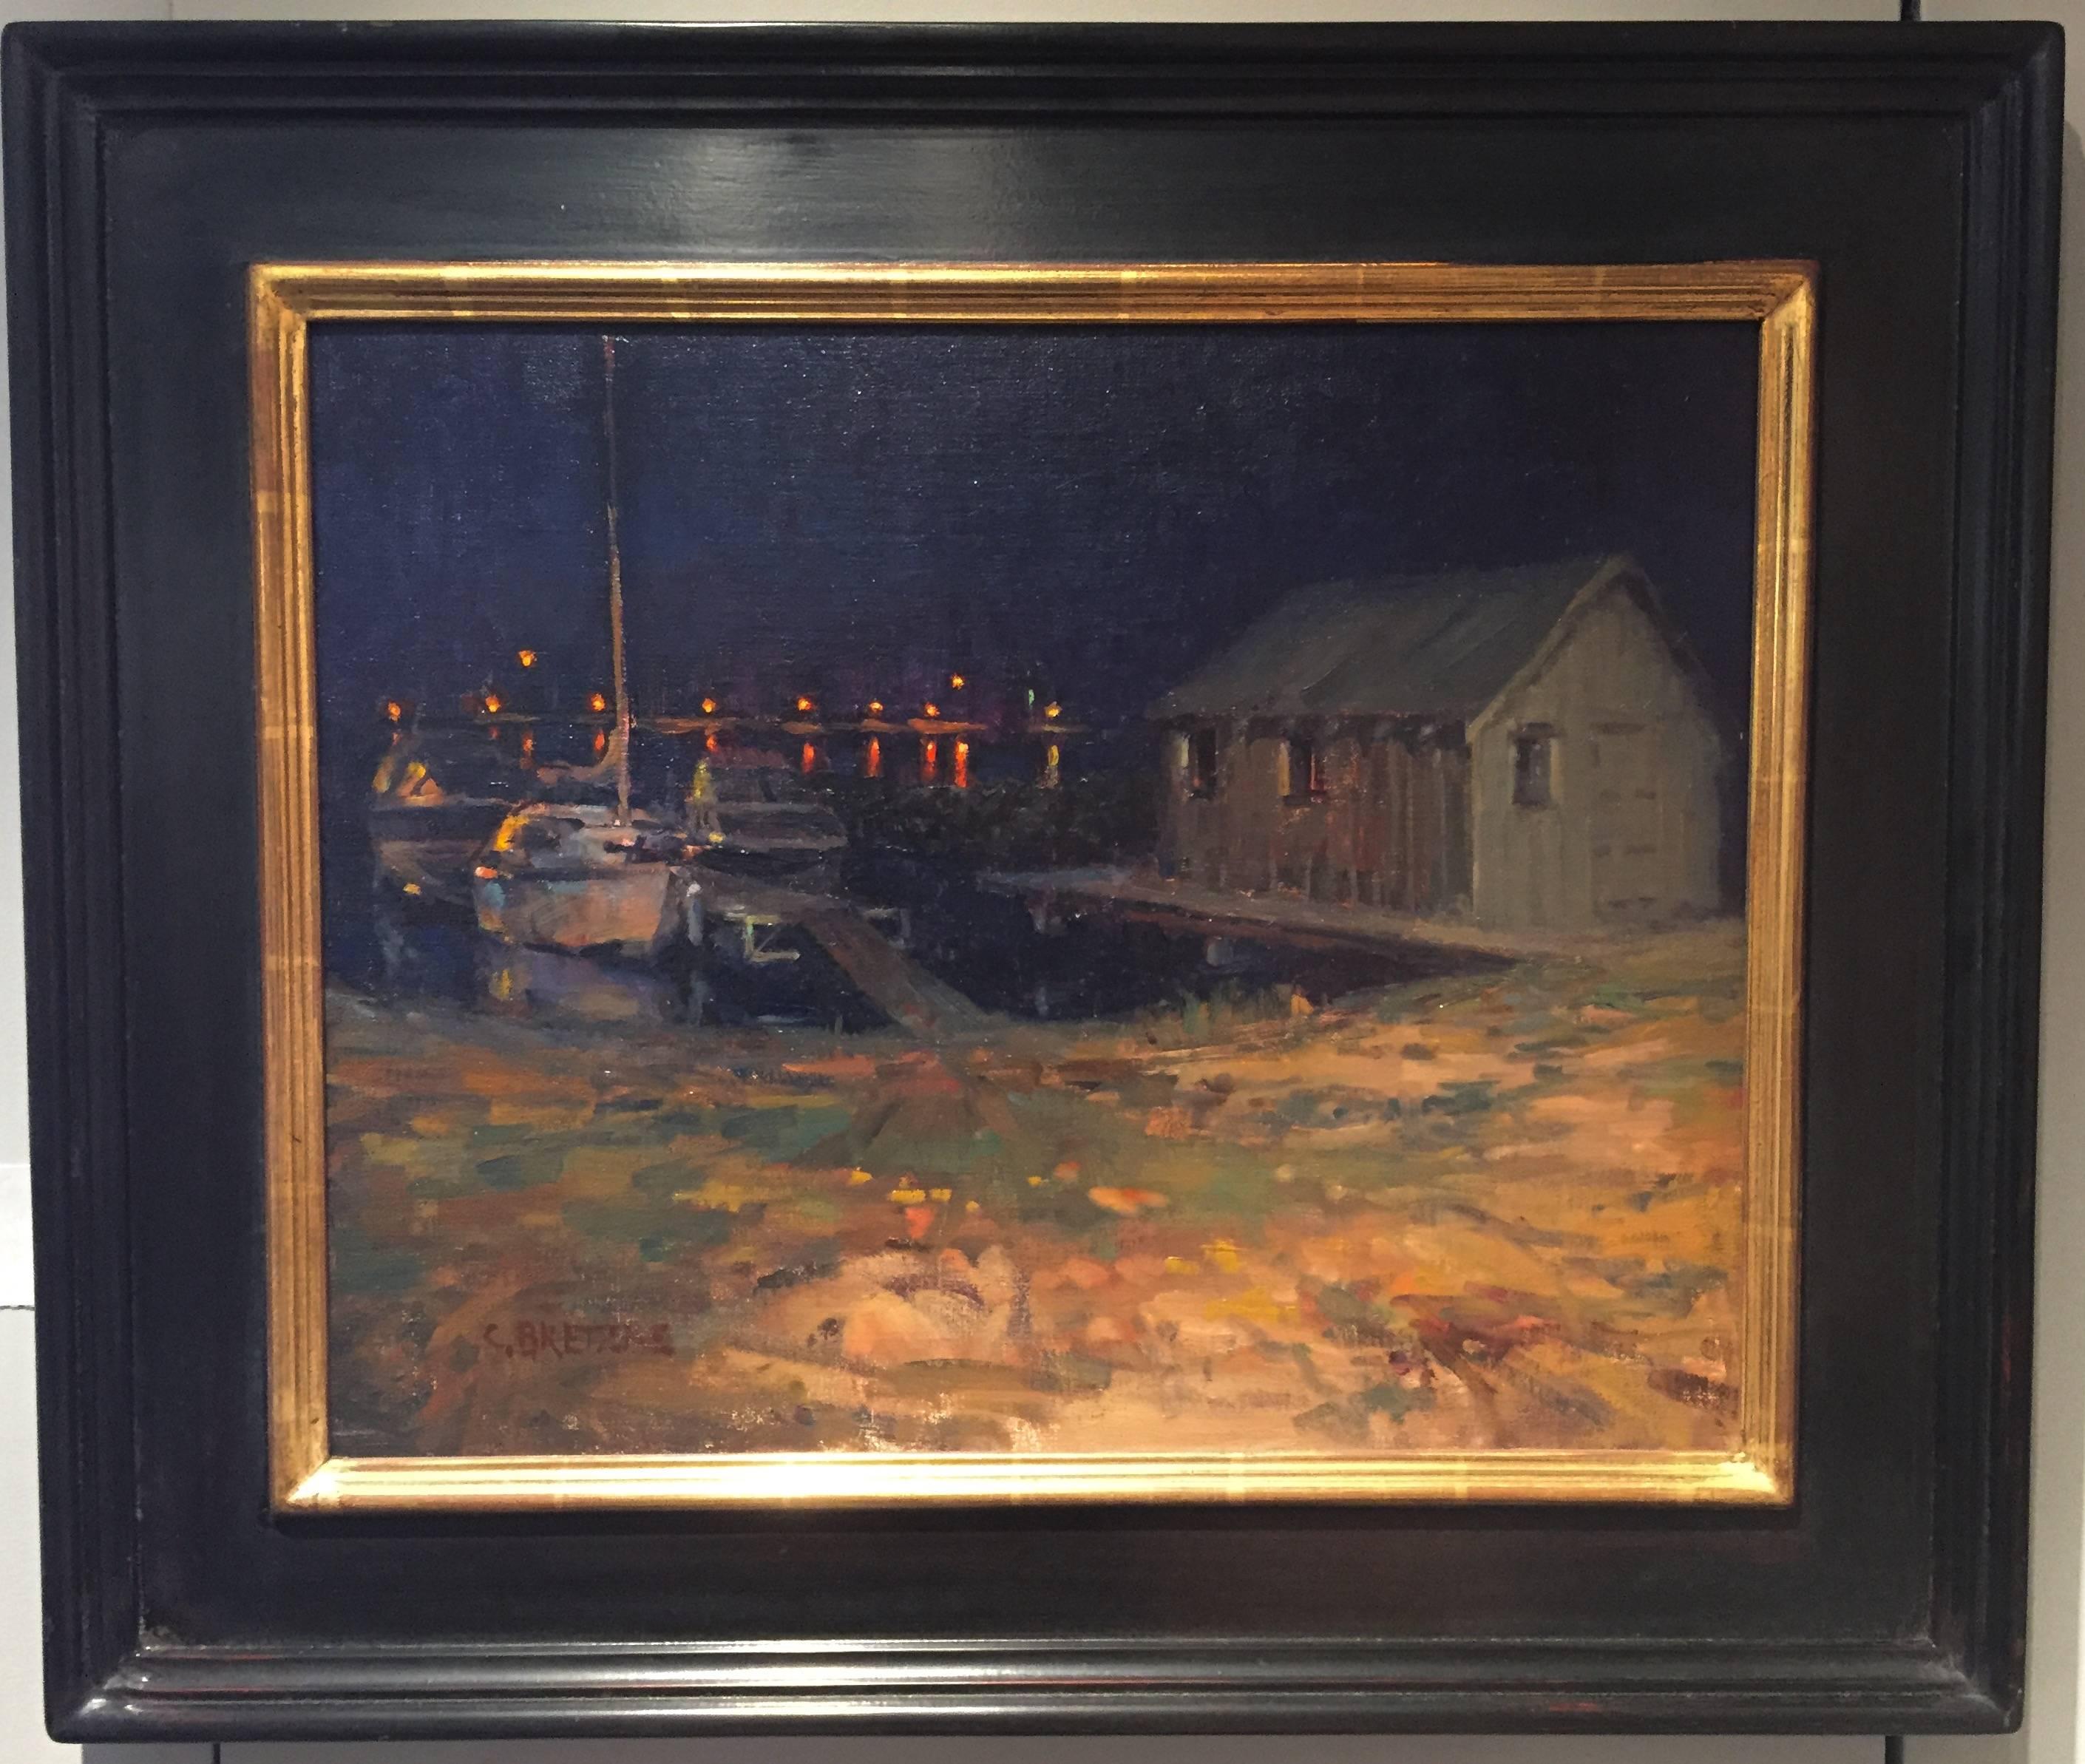 Fishing Shack at Night, Grand Marais - Painting by Carl Bretzke